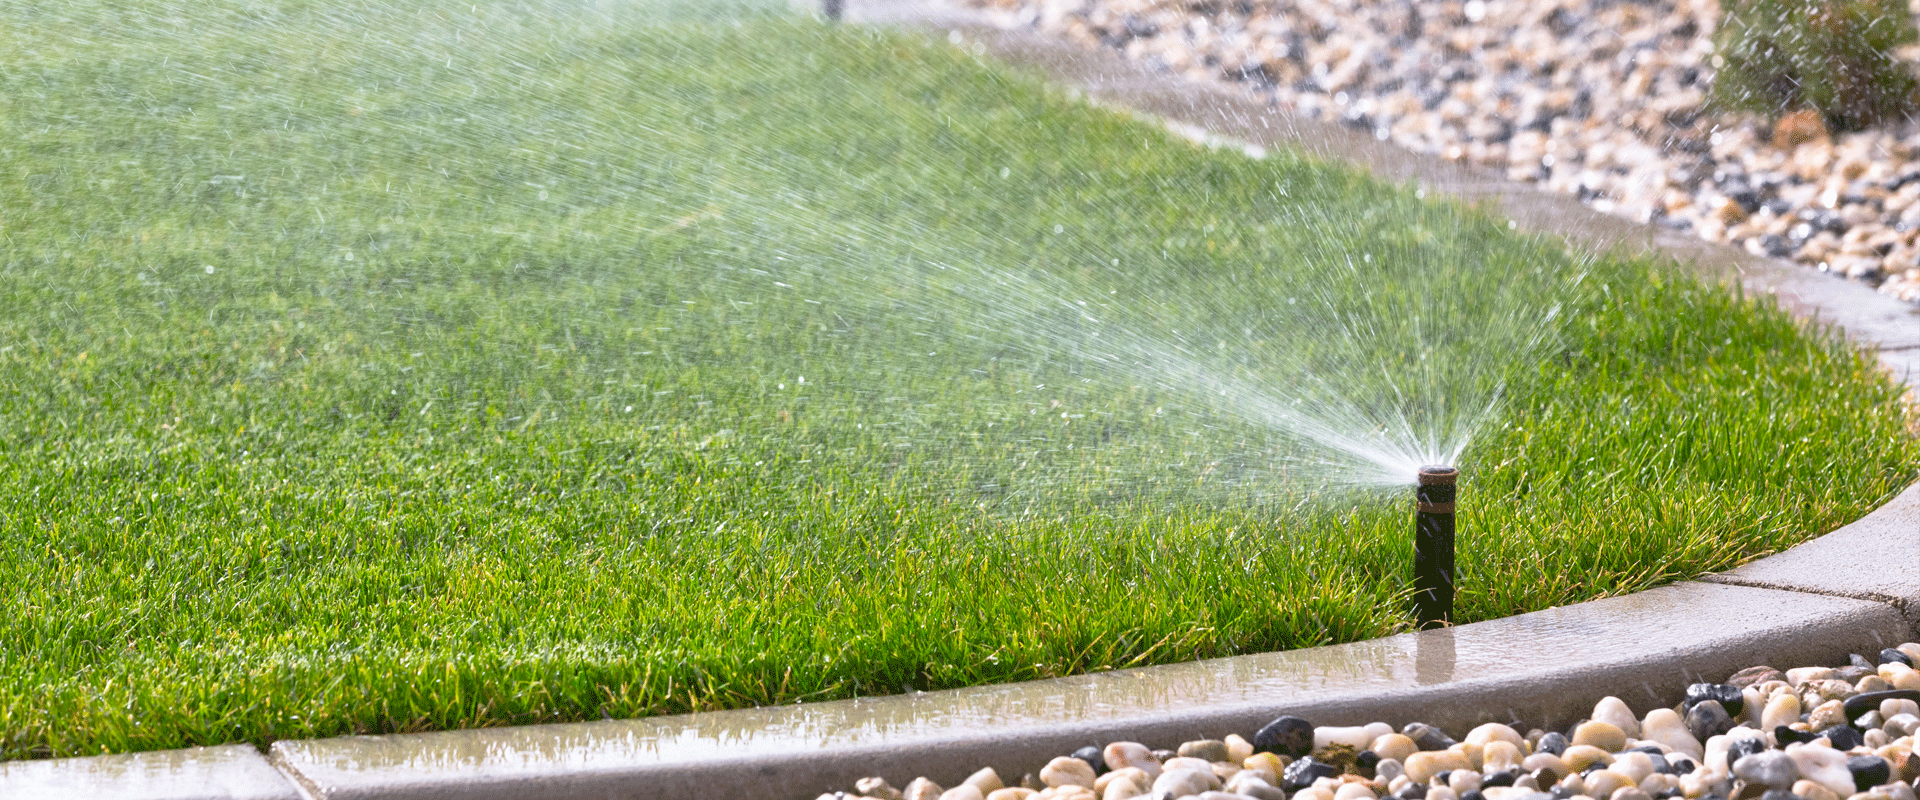 Irrigation & Sprinkler System Installations St. Louis MO